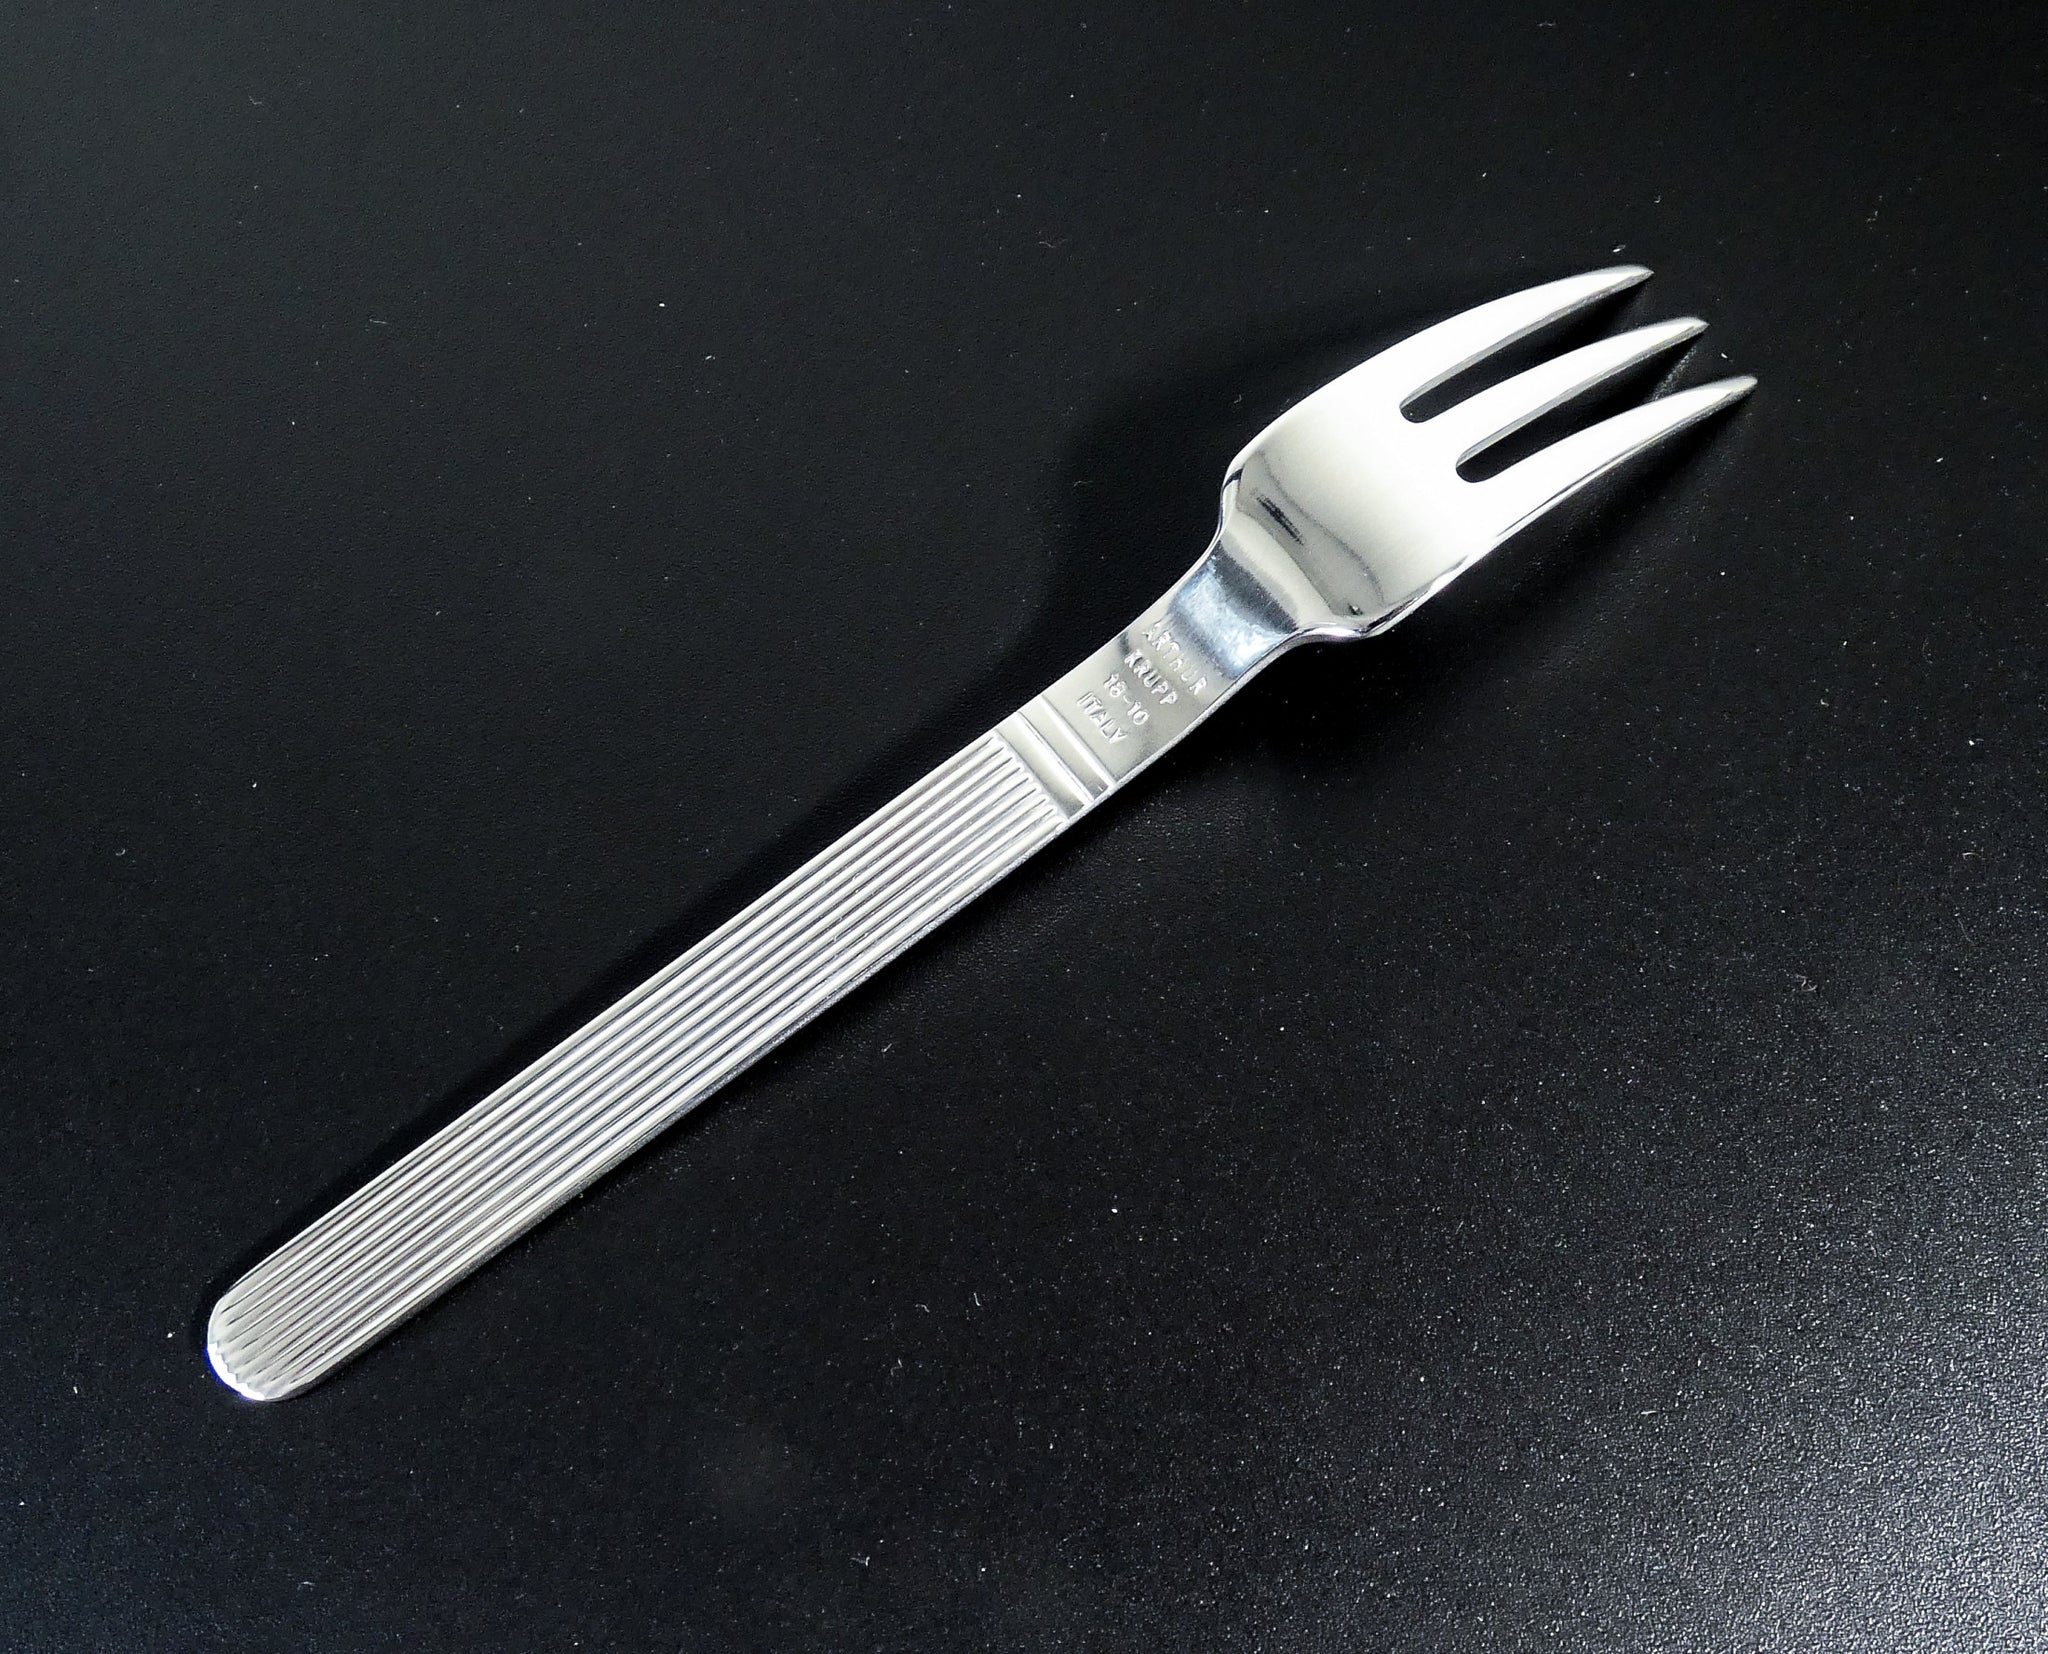 set 12 forchette design arthur krupp acciaio da tavola dolce steel forks